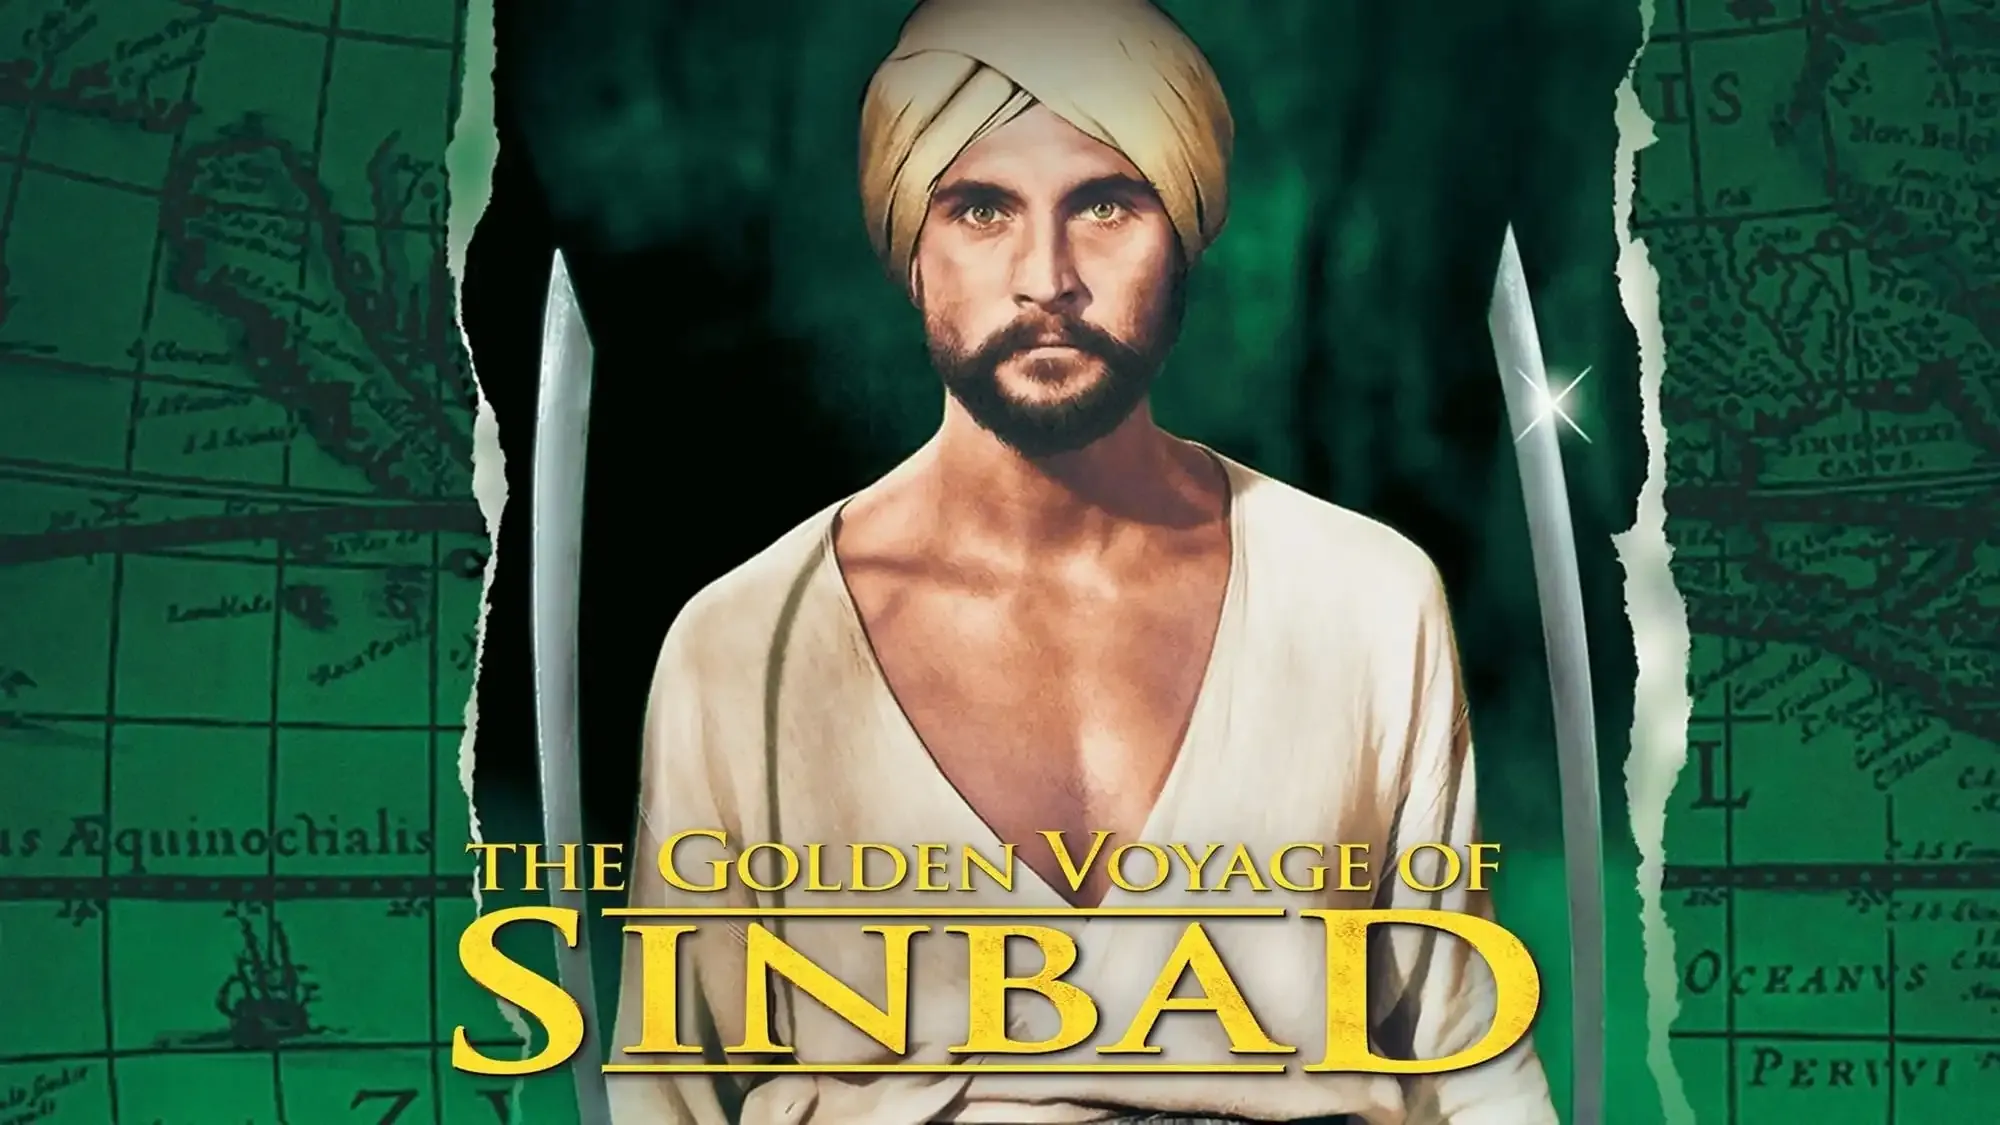 The Golden Voyage of Sinbad movie review